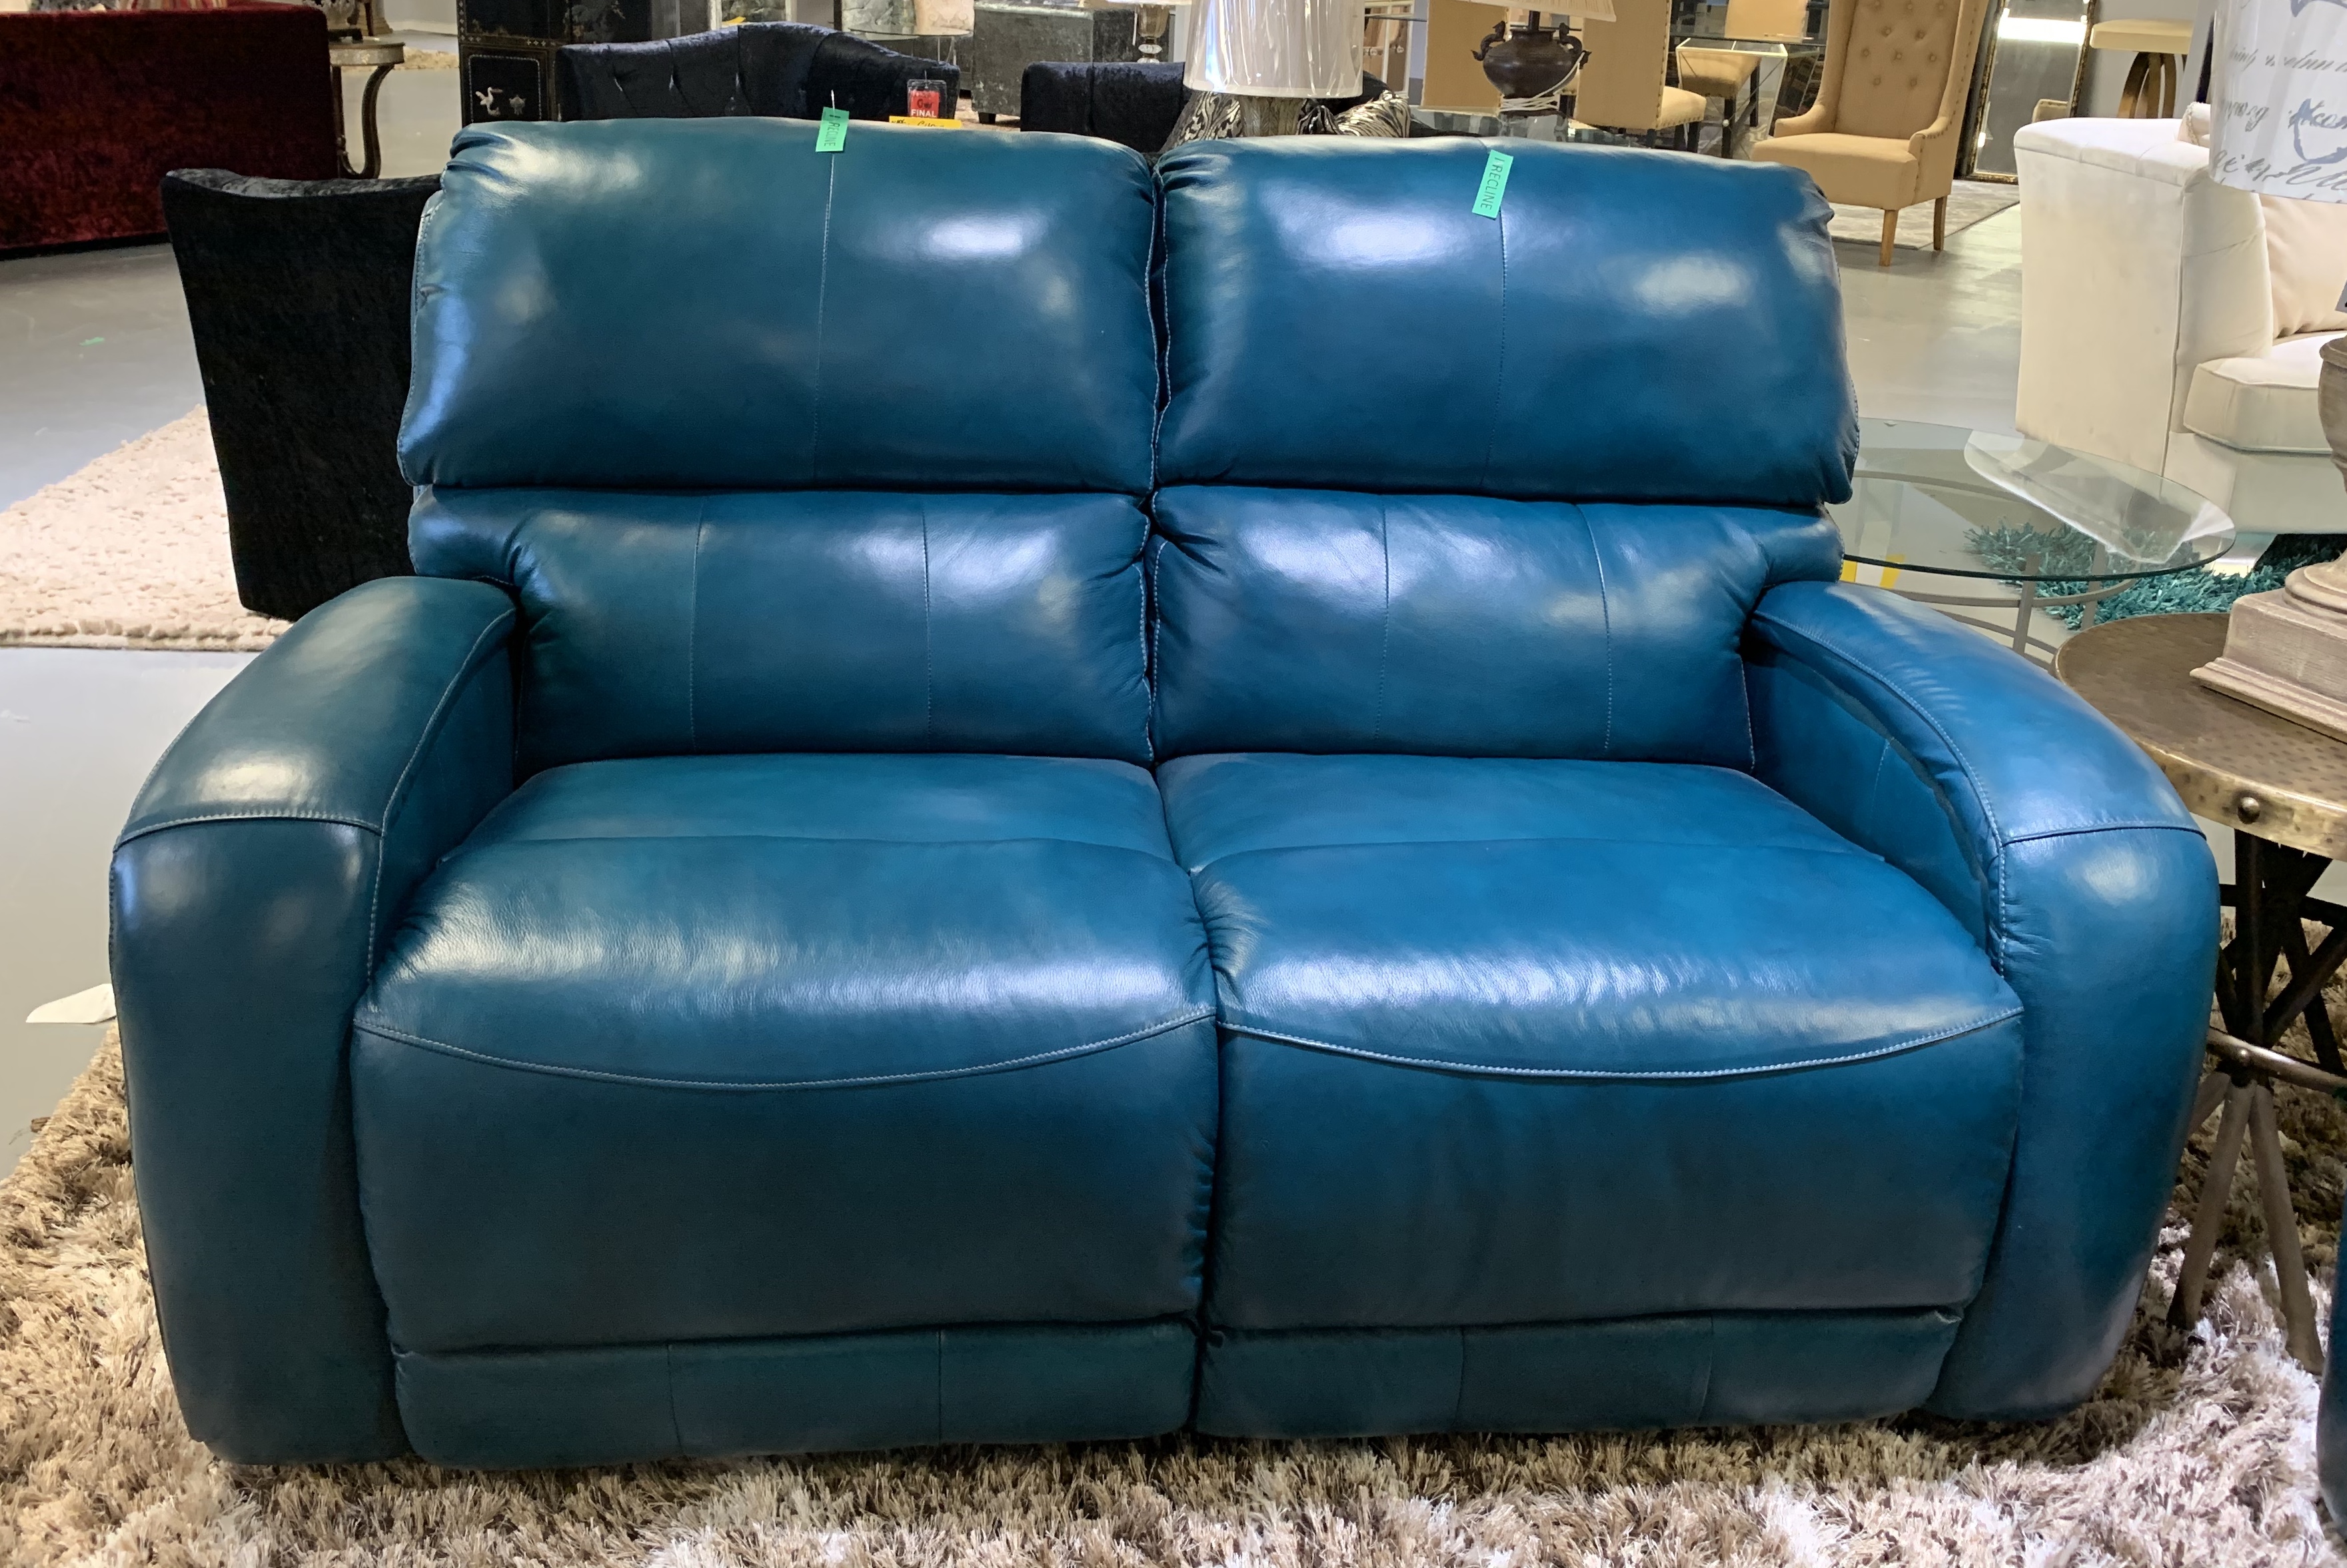 leather loveseat sofa turquoise